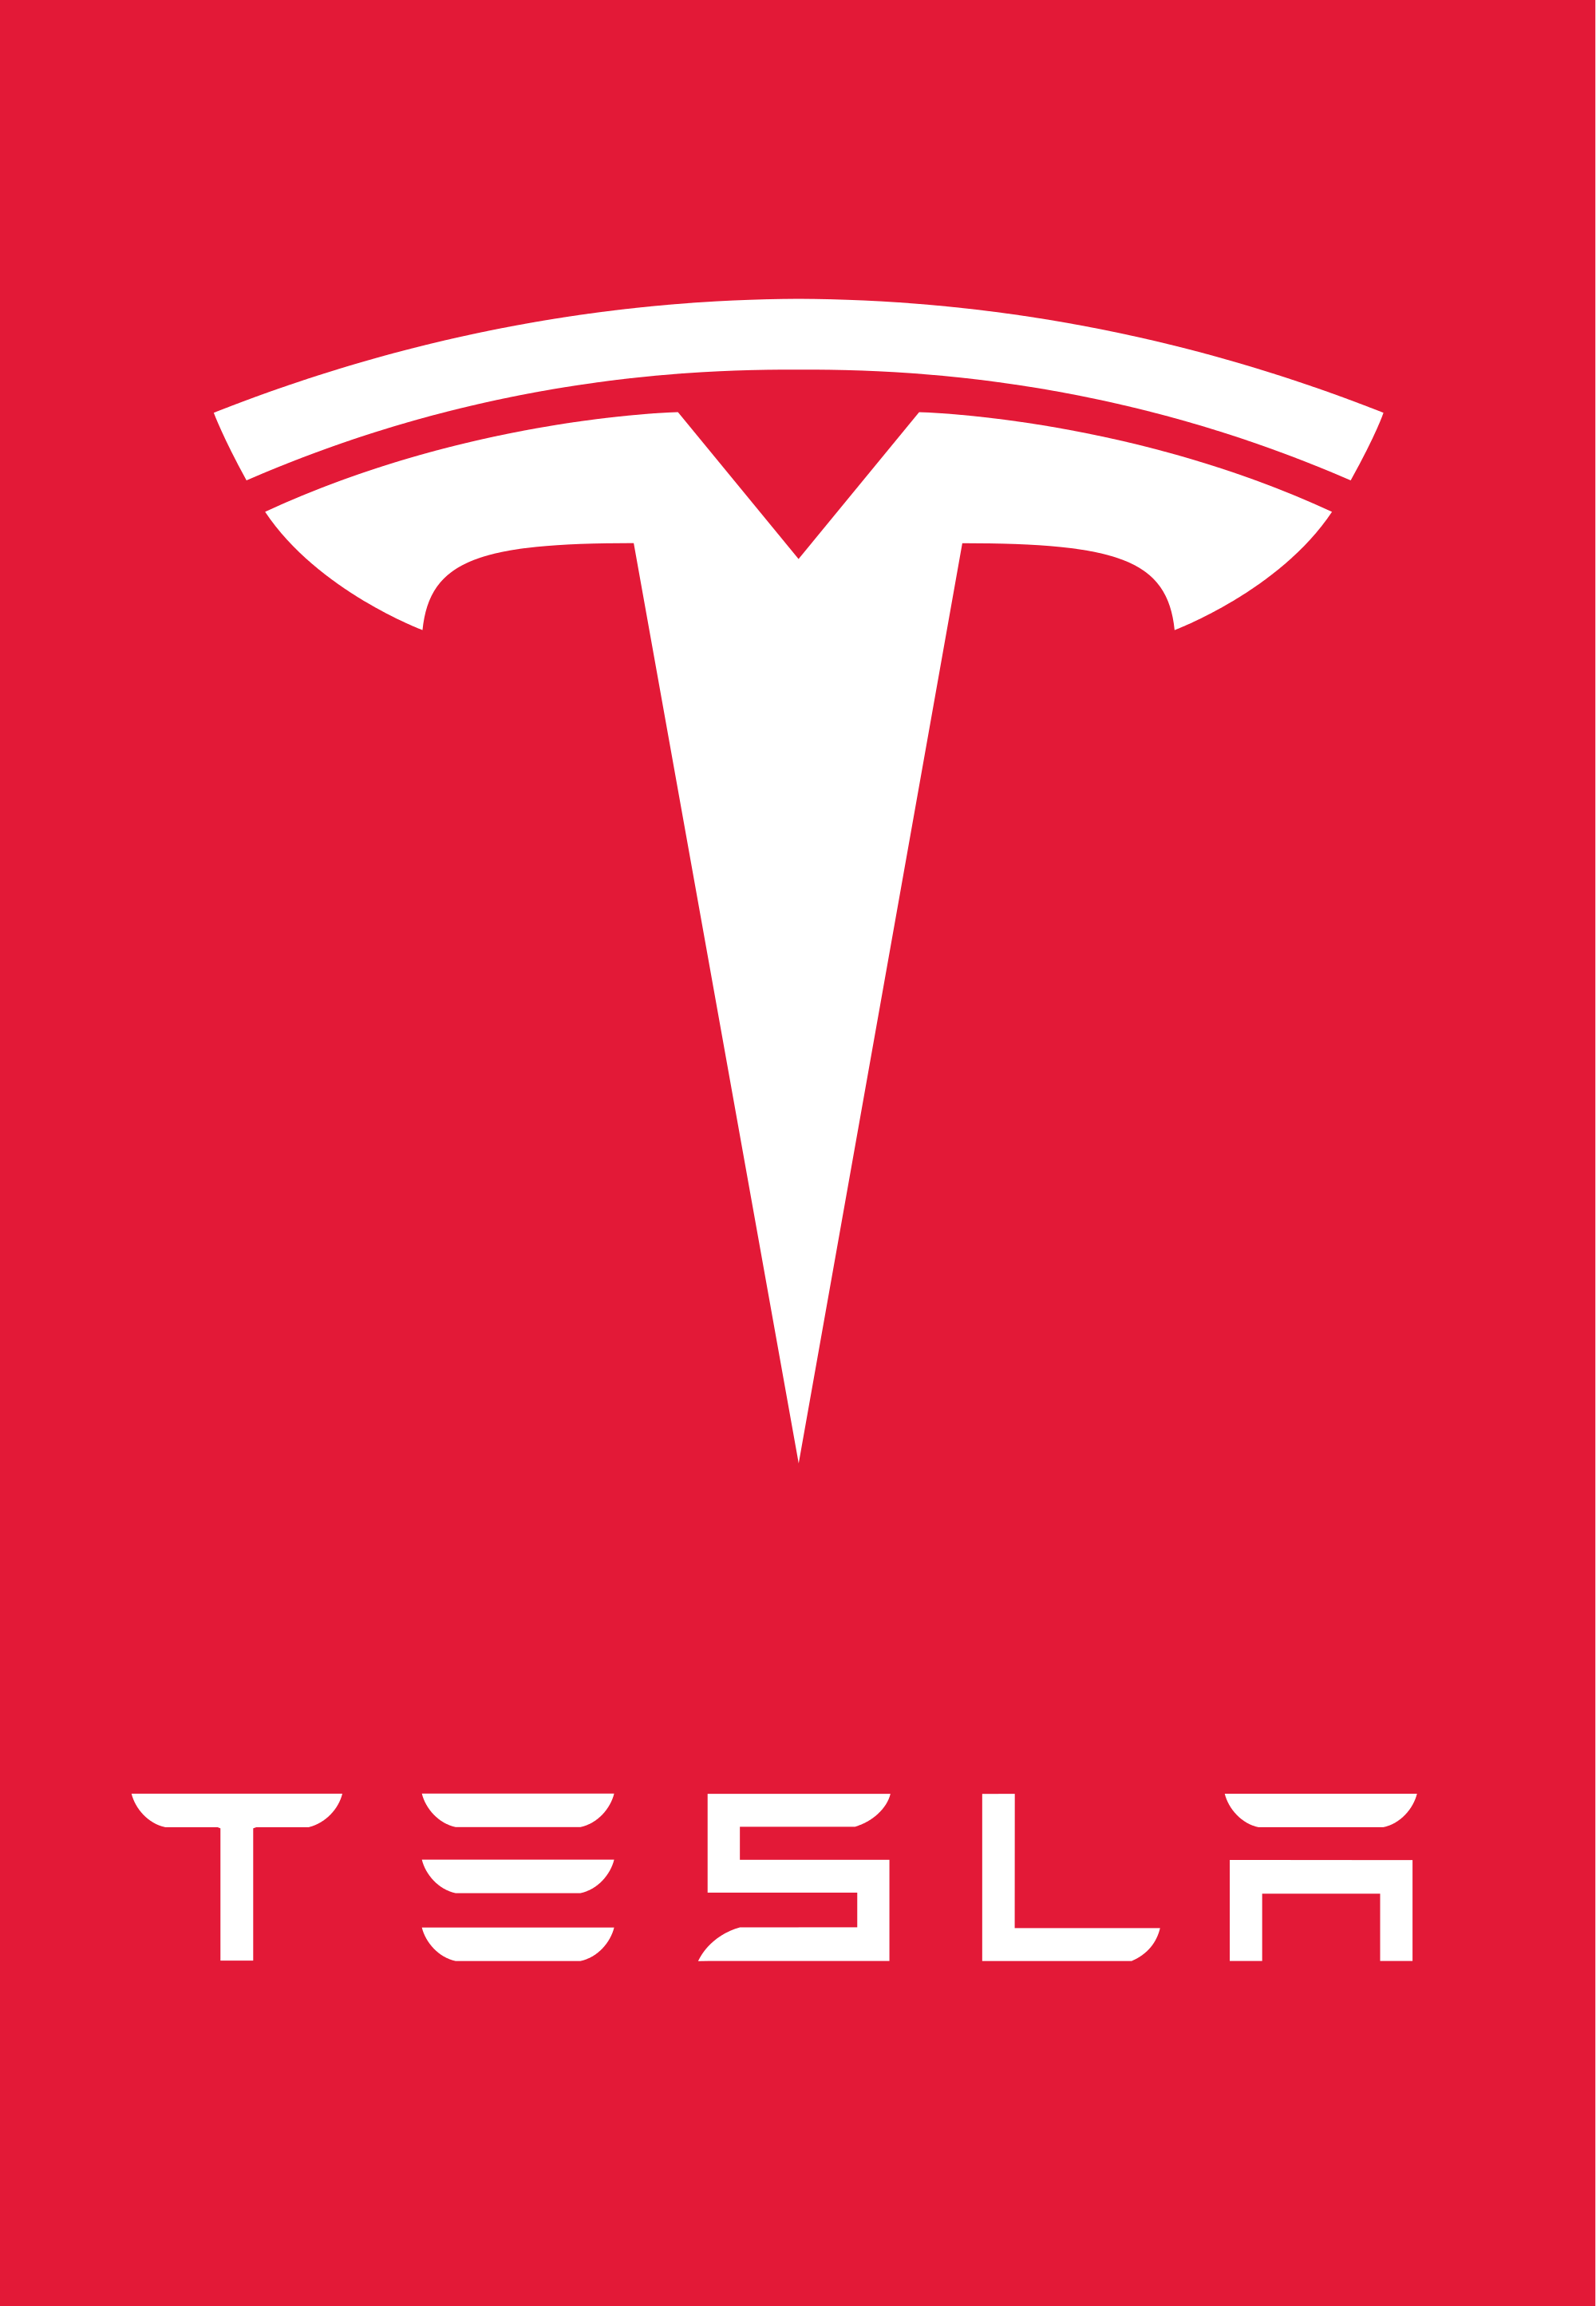 Small History Logo - Tesla Logo, Tesla Car Symbol Meaning and History | Car Brand Names.com